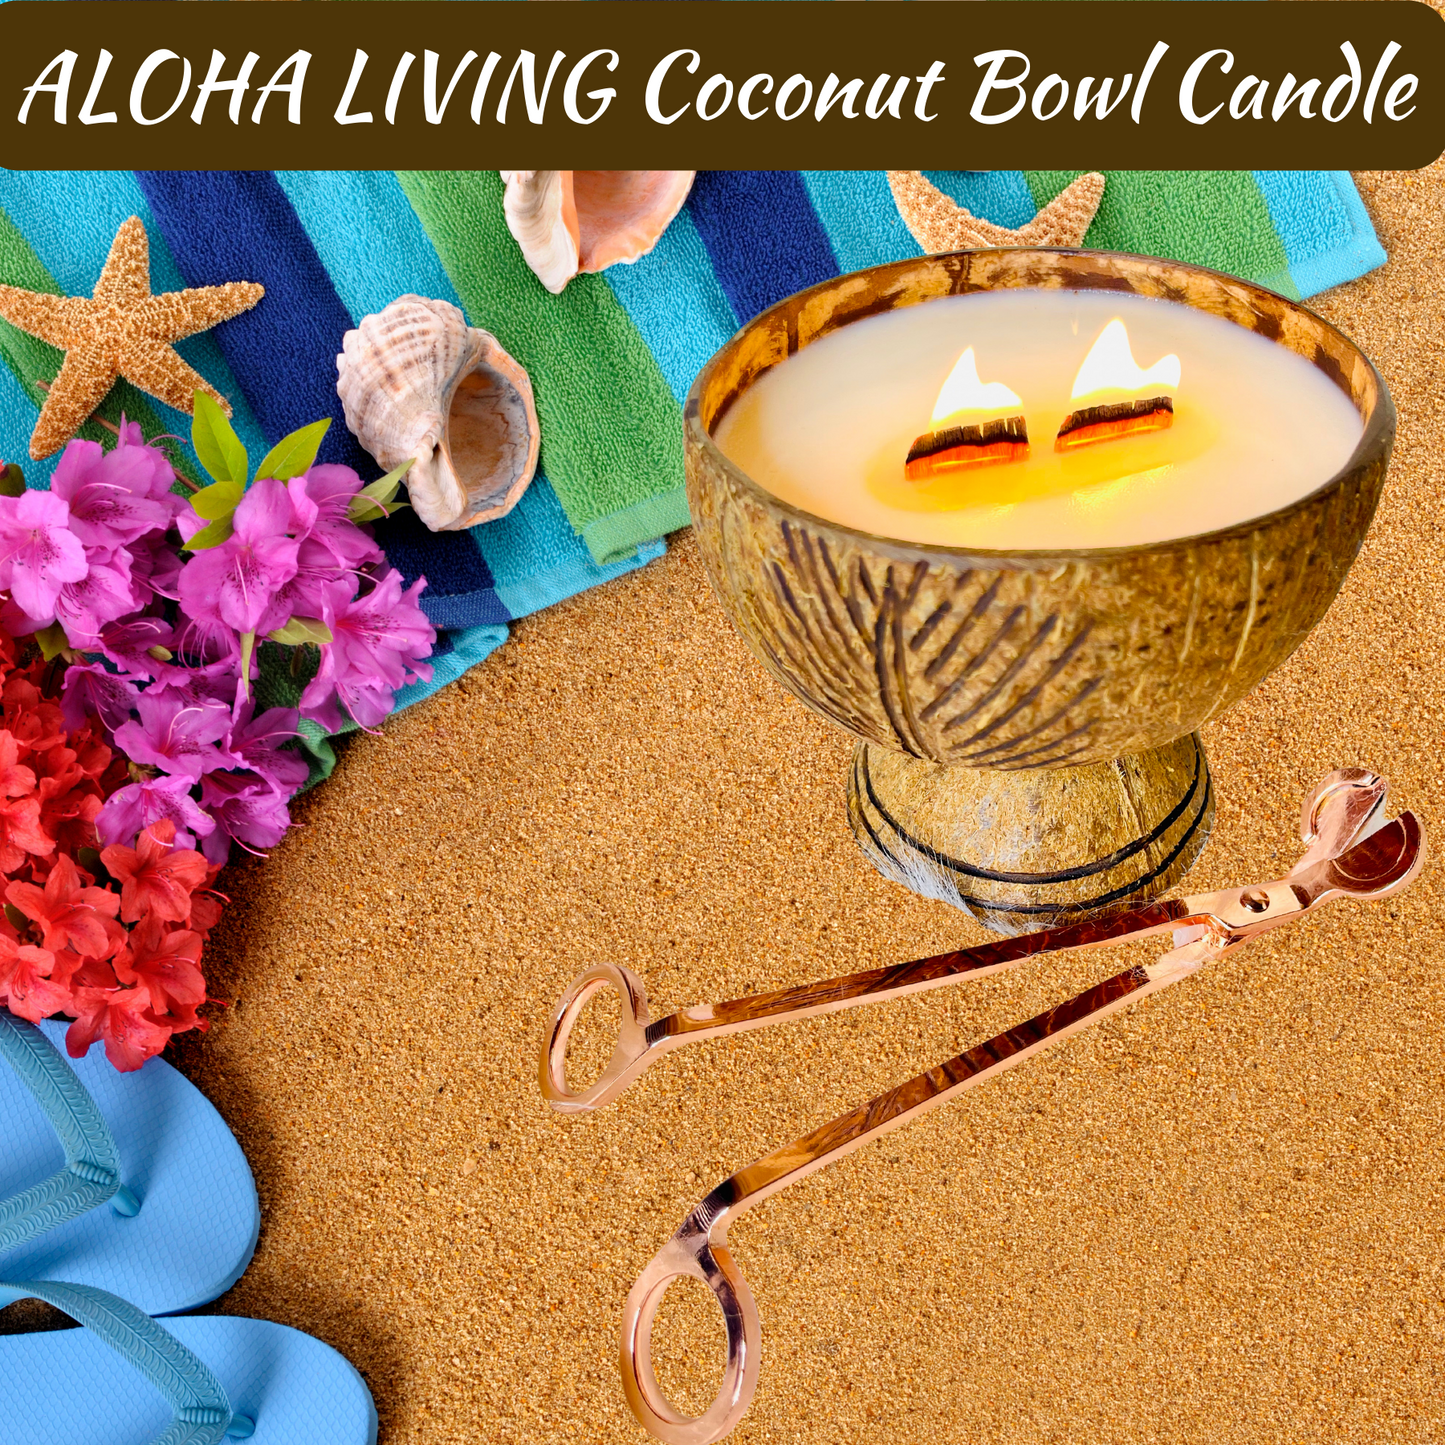 ALOHA LIVING Coconut Bowl Candle